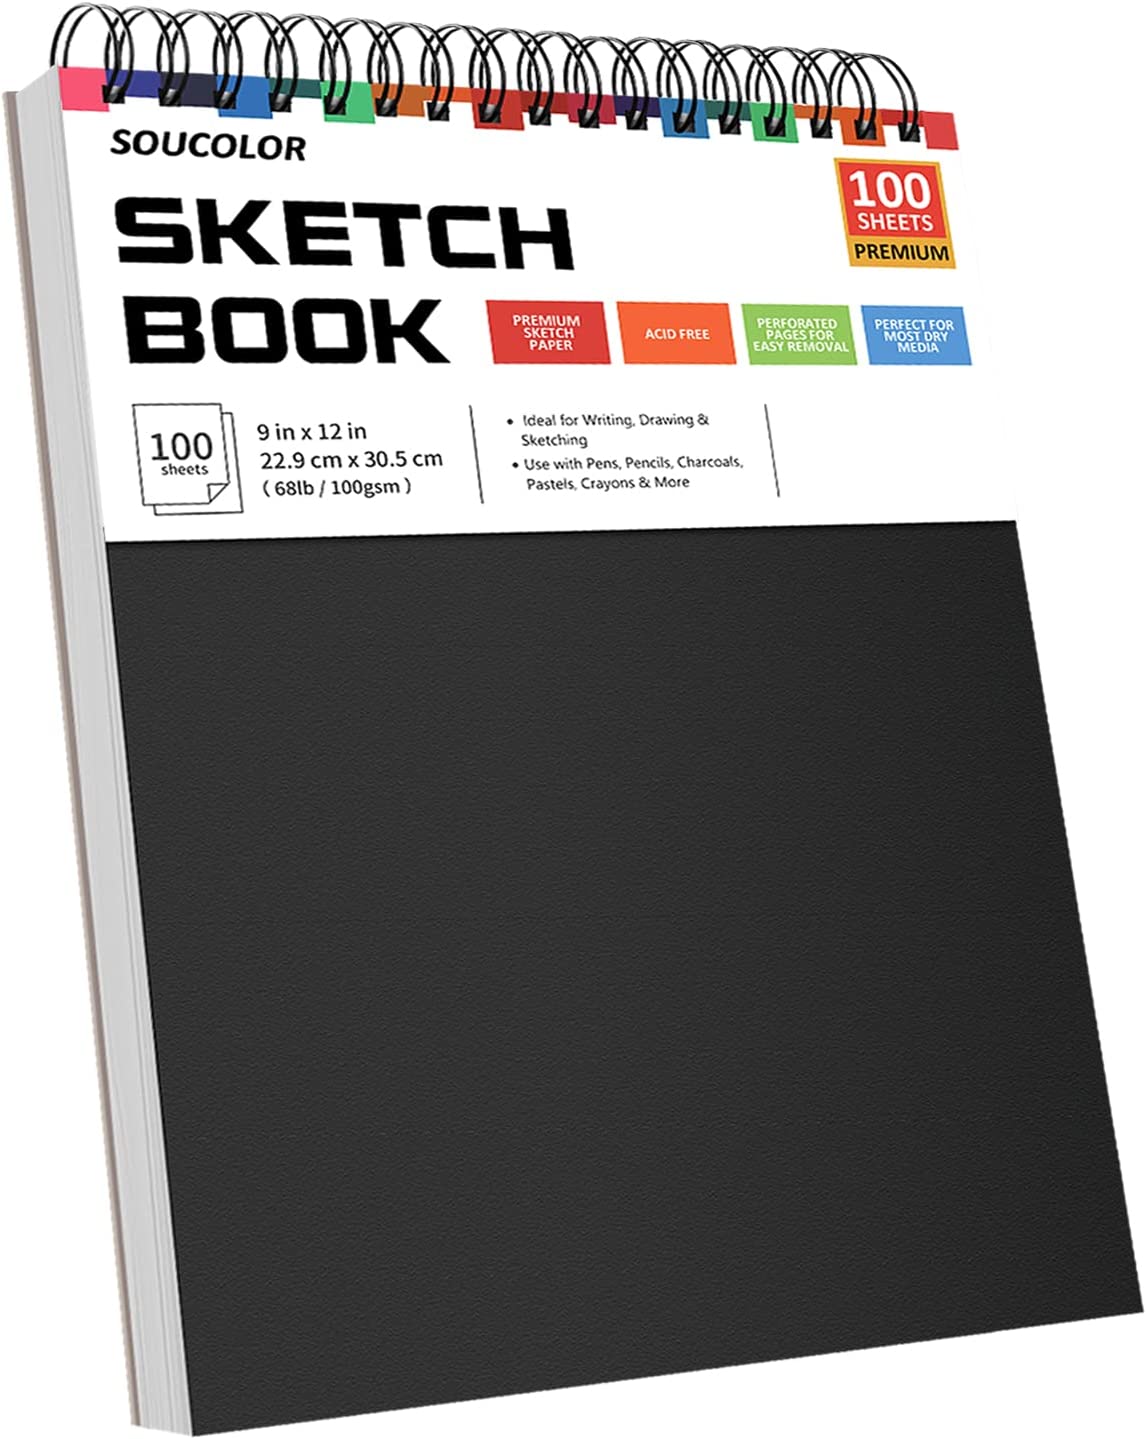 iBayam 78-Pack Drawing Set Sketching Kit Pro Art Supplies with 75